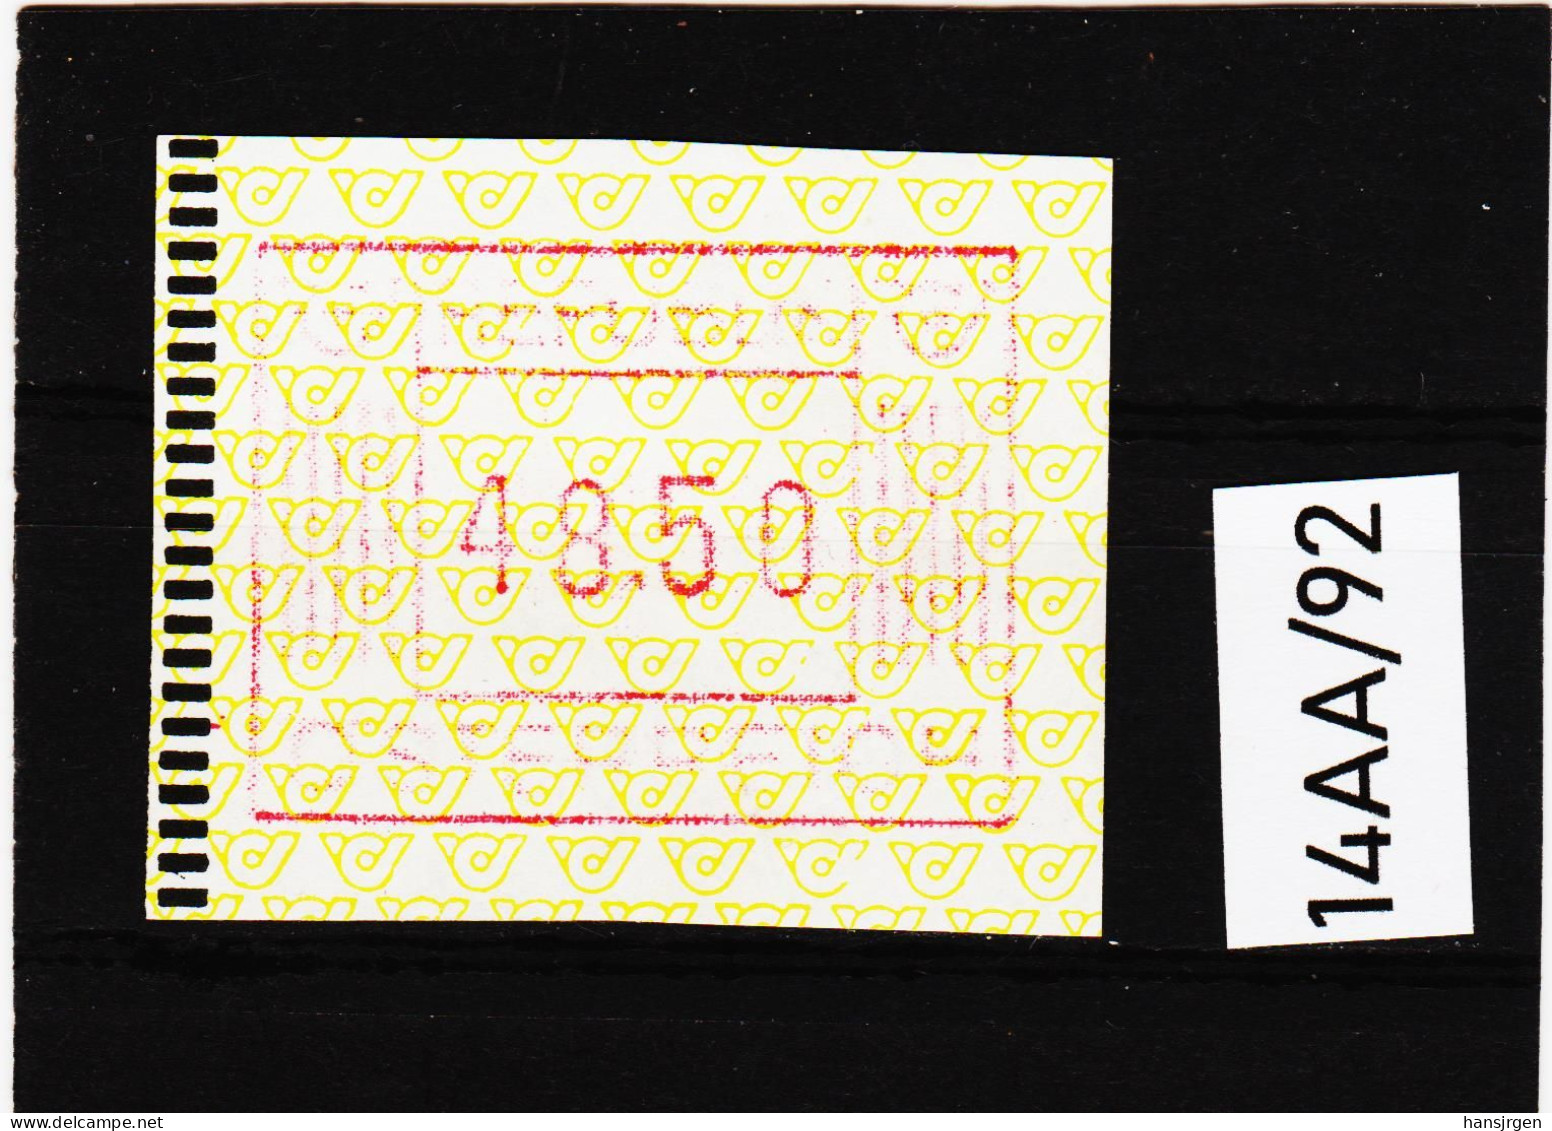 14AA/92  ÖSTERREICH 1983 AUTOMATENMARKEN 1. AUSGABE  48,50 SCHILLING   ** Postfrisch - Timbres De Distributeurs [ATM]